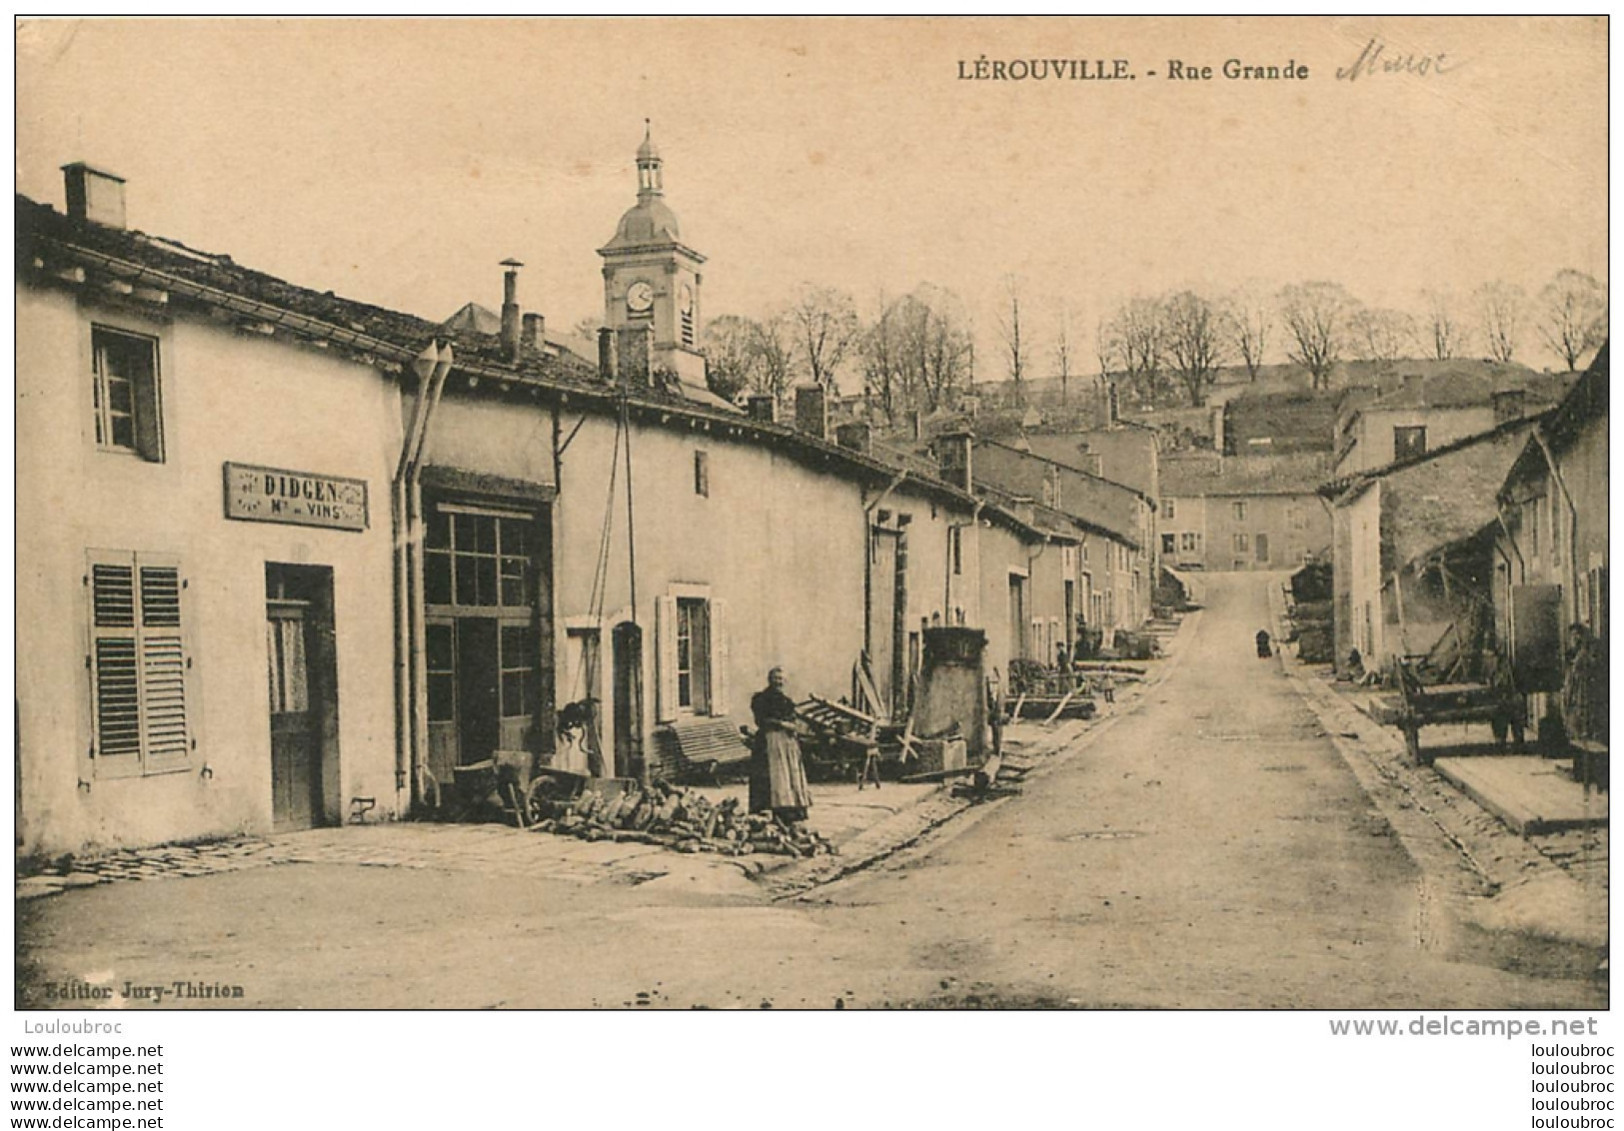 LEROUVILLE RUE GRANDE MAISON DIDGEN - Lerouville